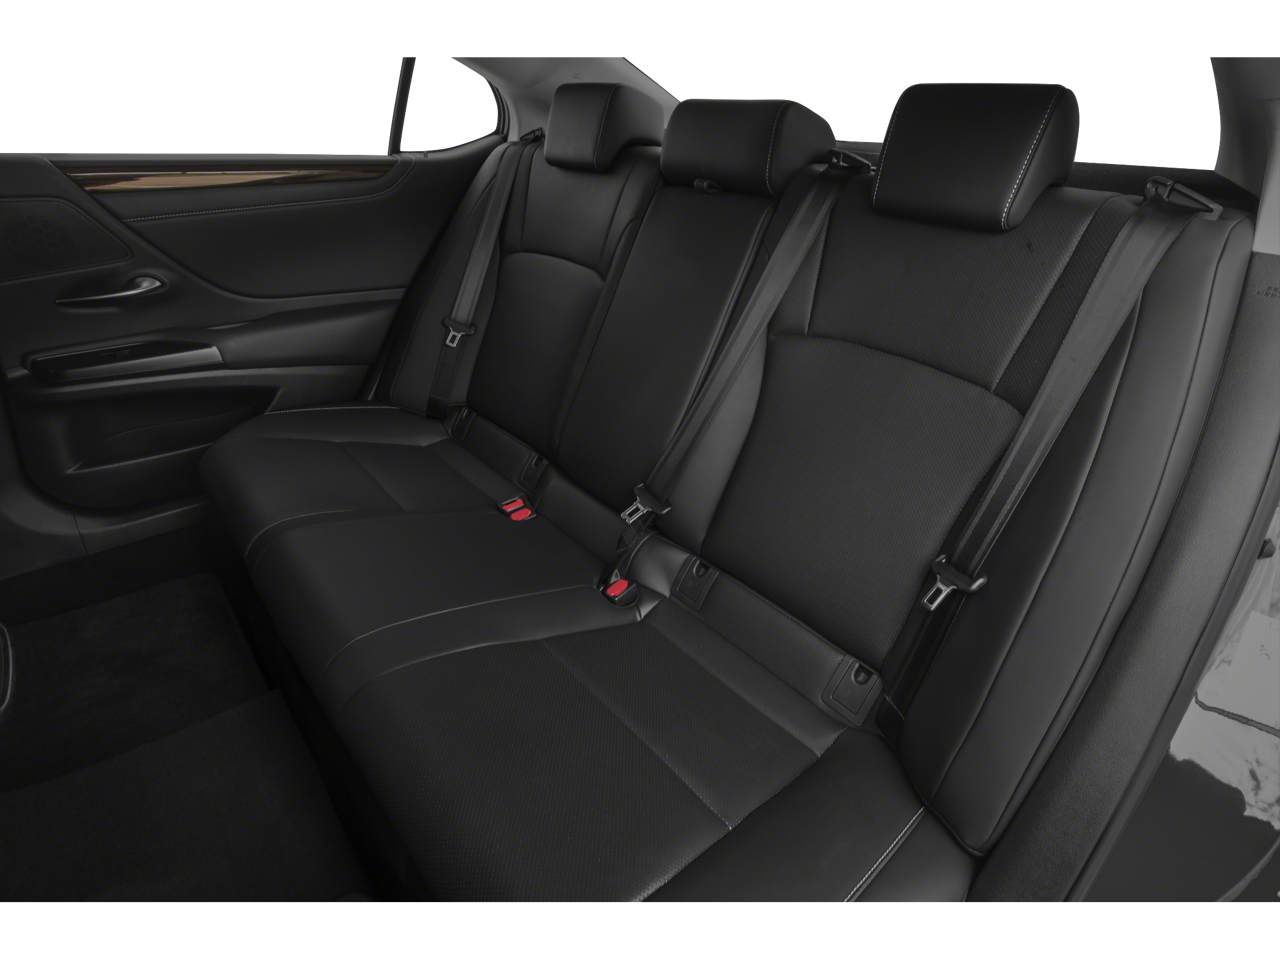 2021 Lexus ES 300h Ultra Luxury